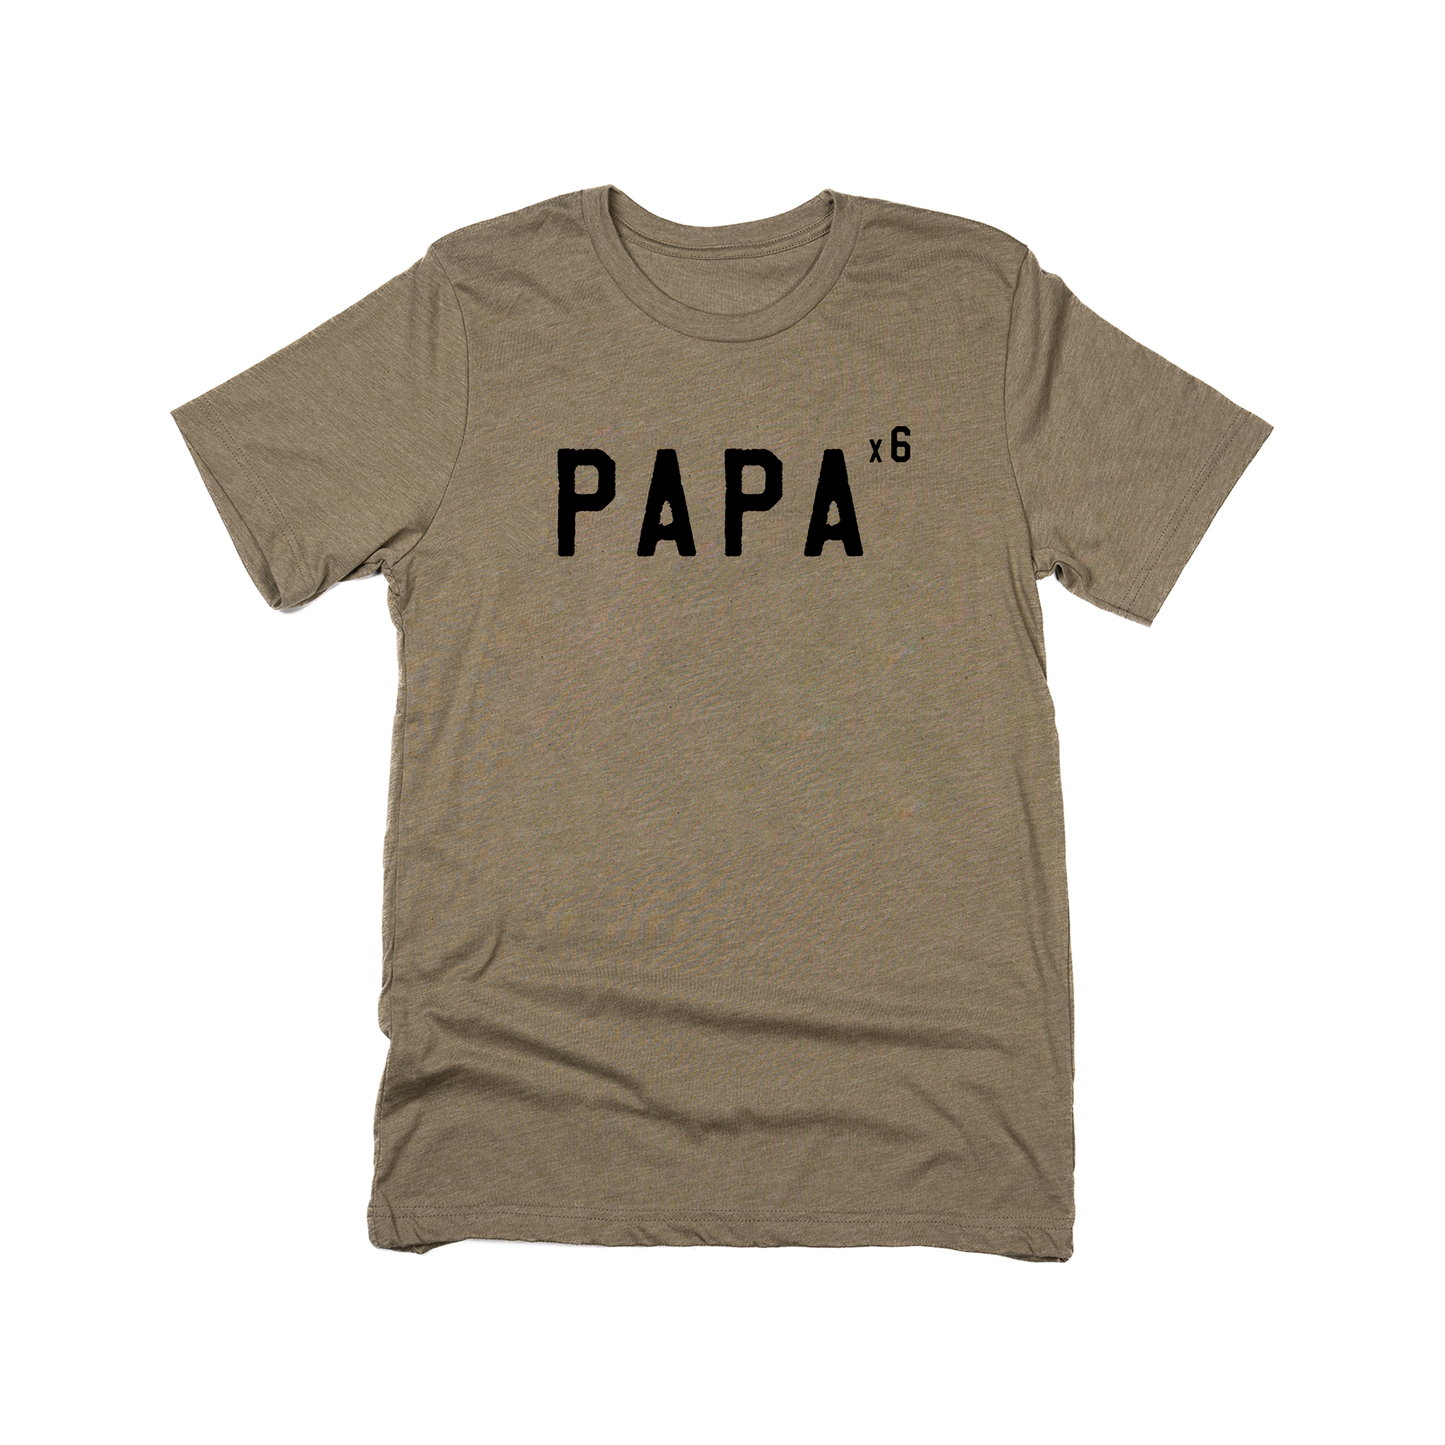 Papa x6 (Customizable,  Black) - Tee (Olive)